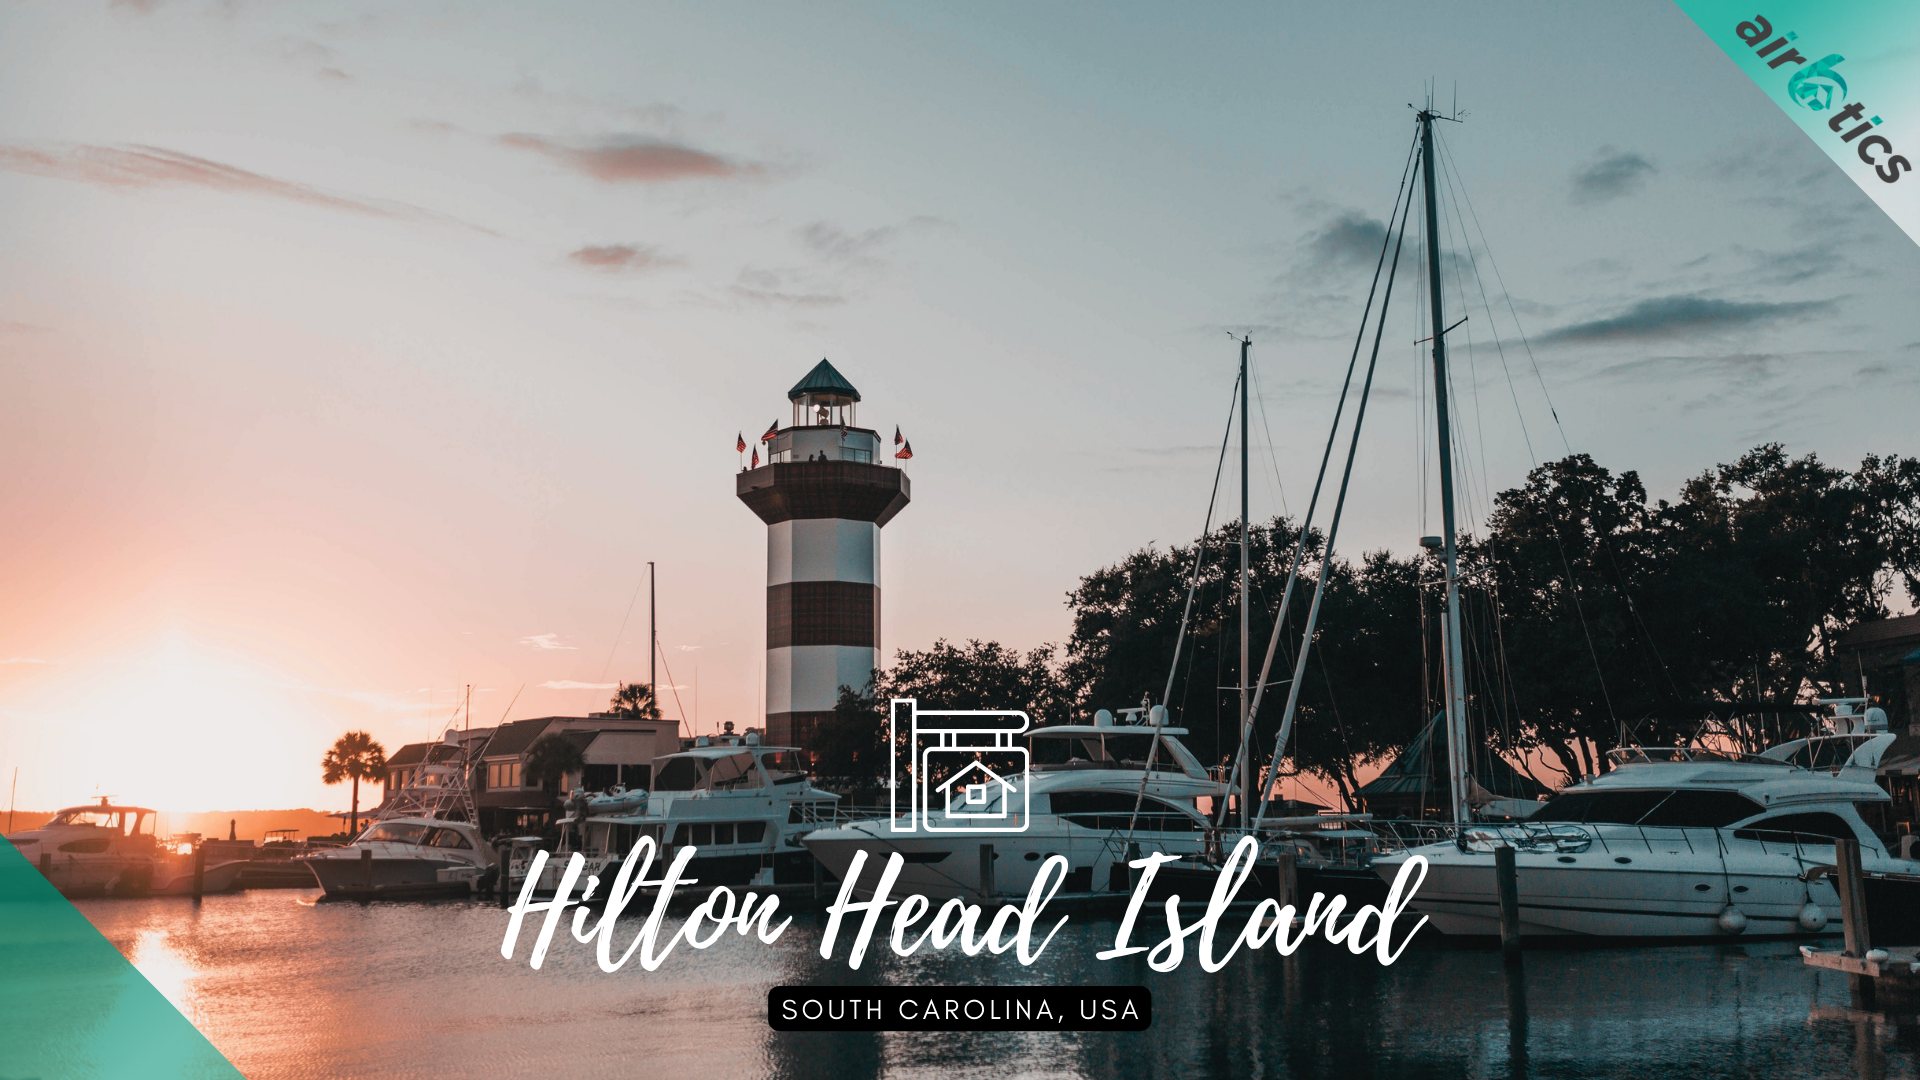 airbnb property investment Hilton Head Island